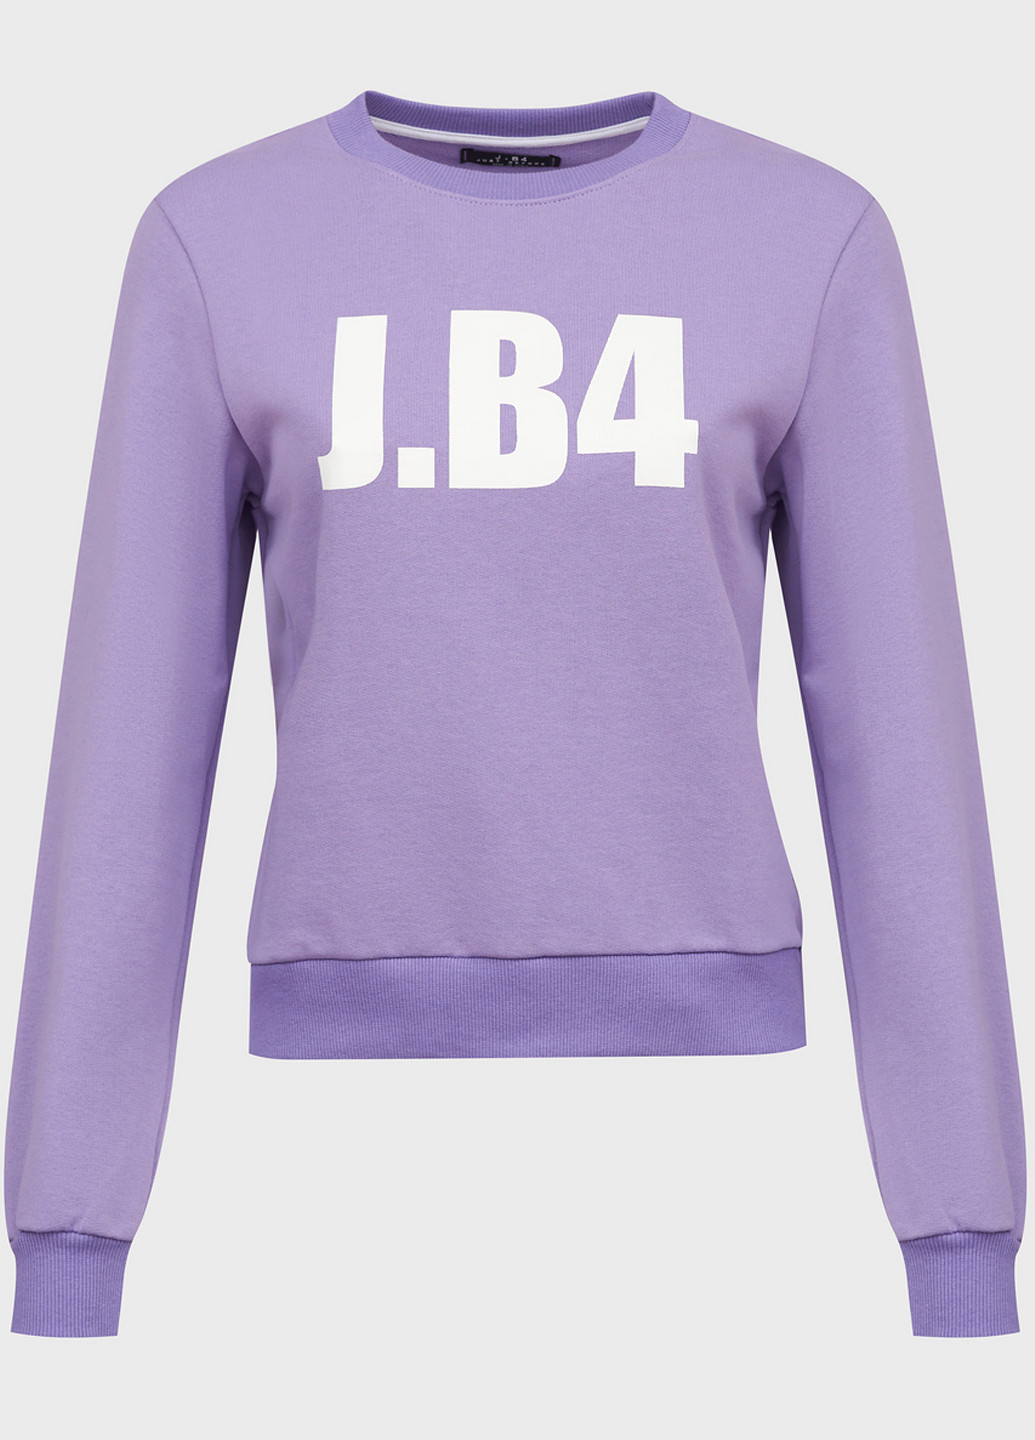 Свитшот J.B4 (Just Before) - крой фиолетовый кэжуал - (253257799)